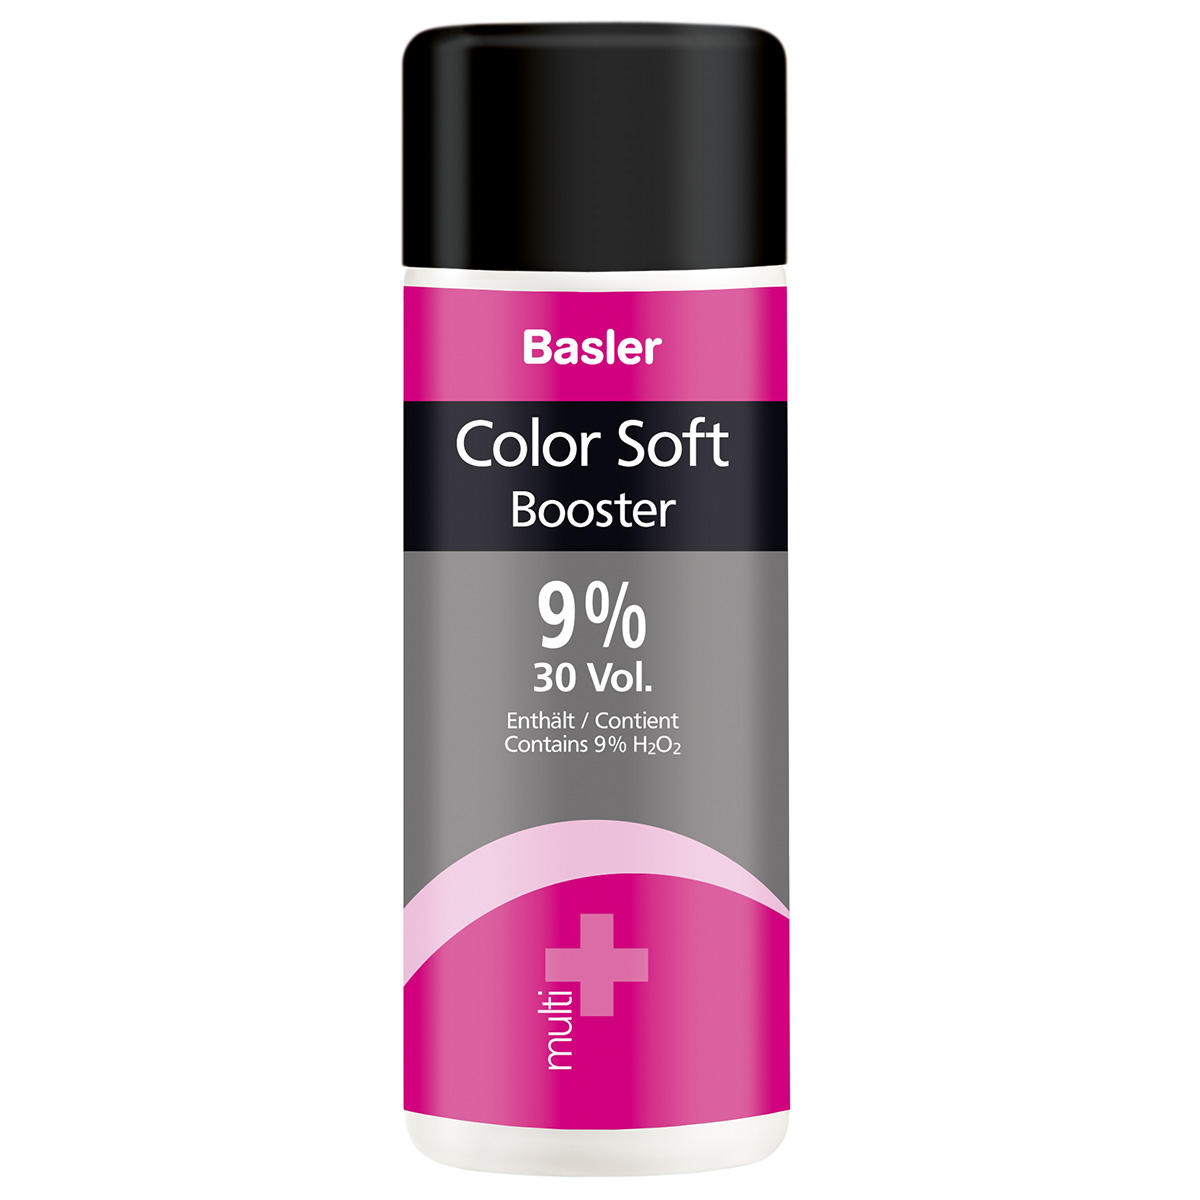 Basler Color Soft multi Booster 9 % - 30 Vol., Flasche 200 ml - 1